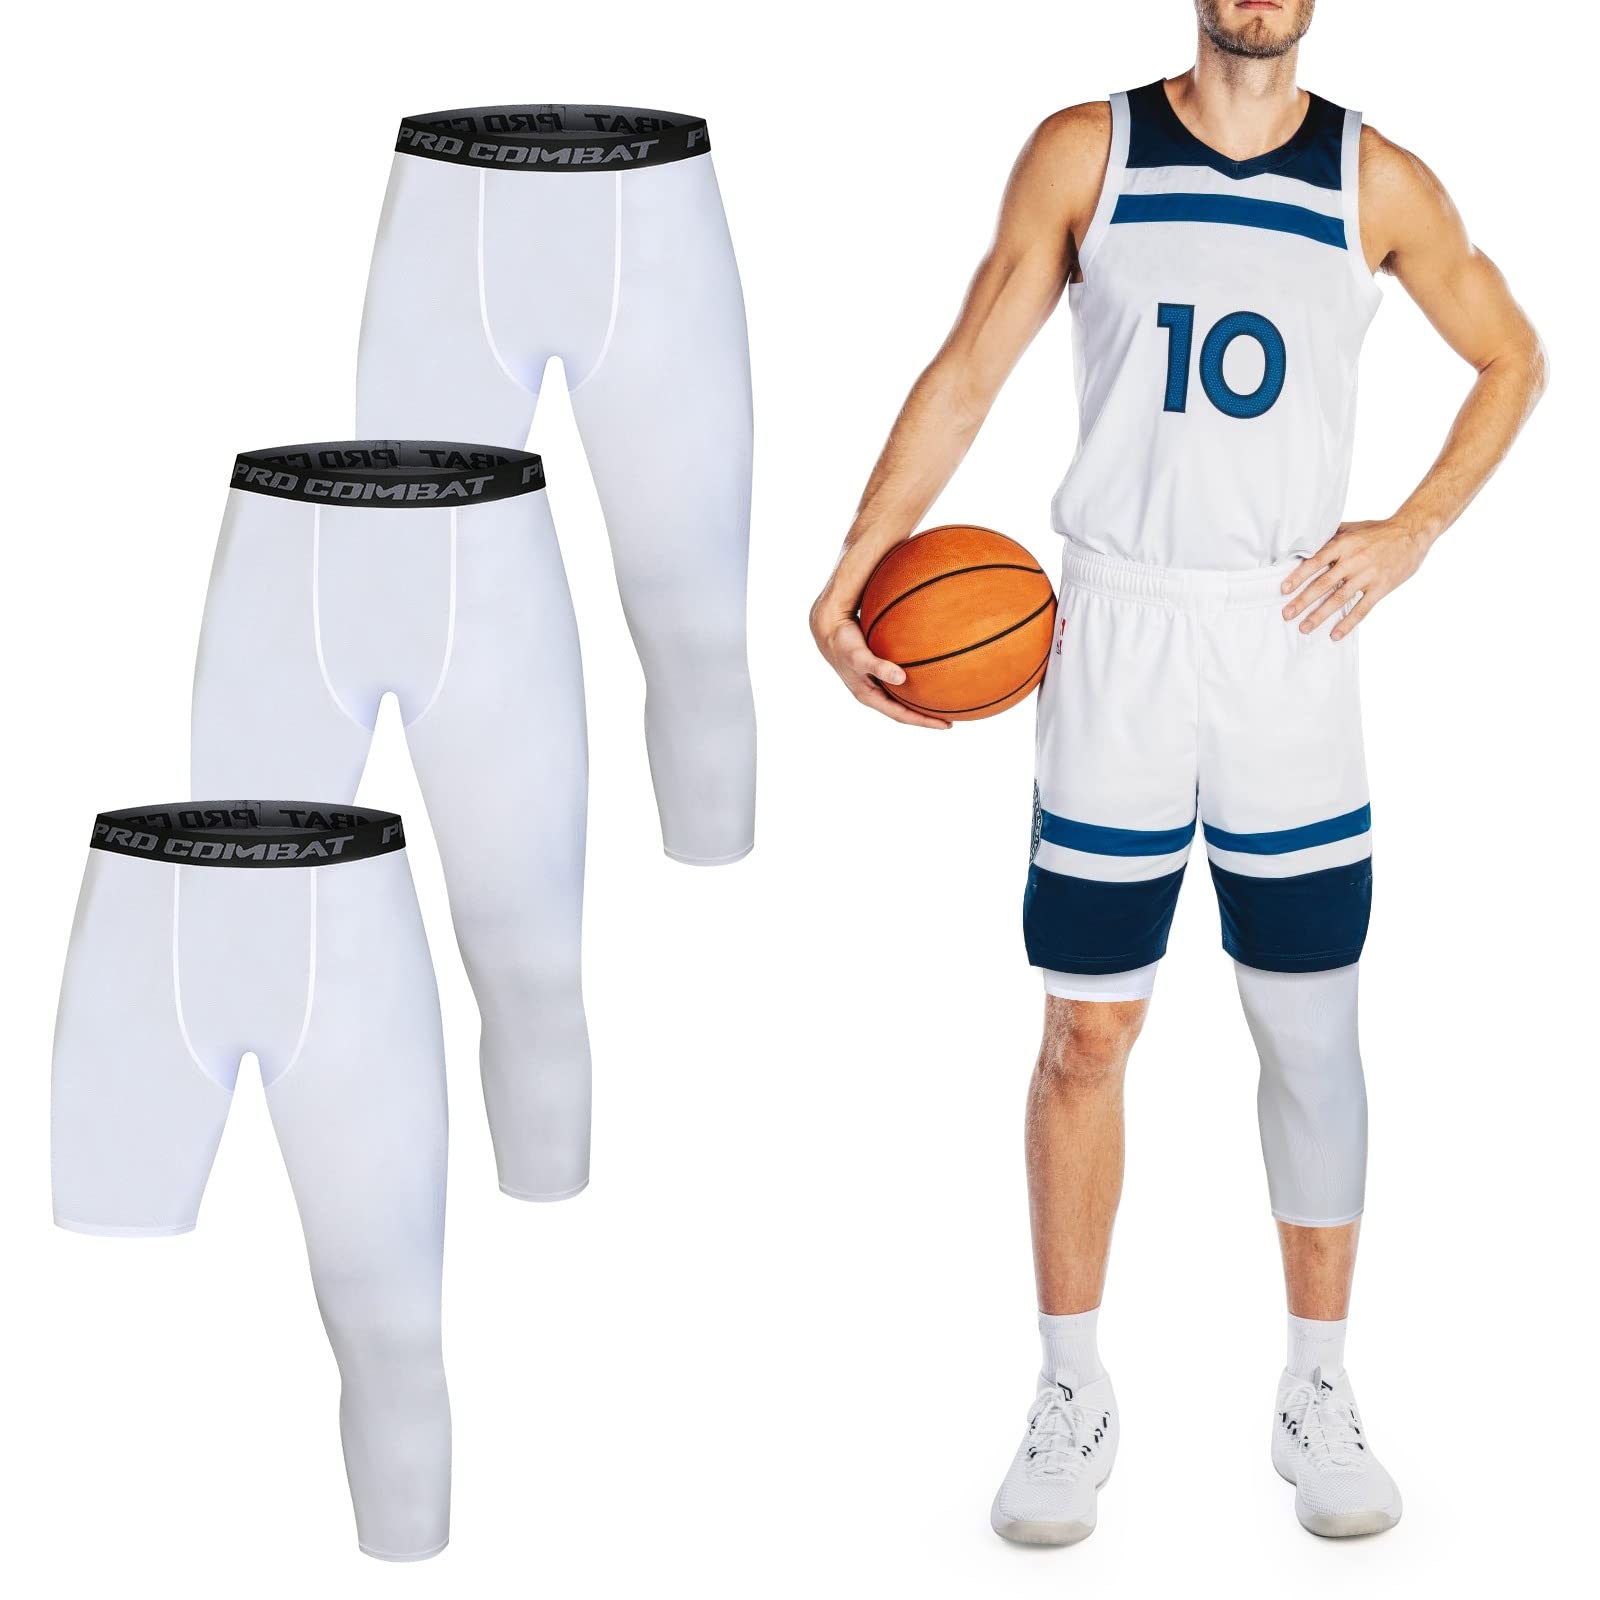 Buy Mens 3/4 Compression Pants 3 Pack Basketball Running Tights